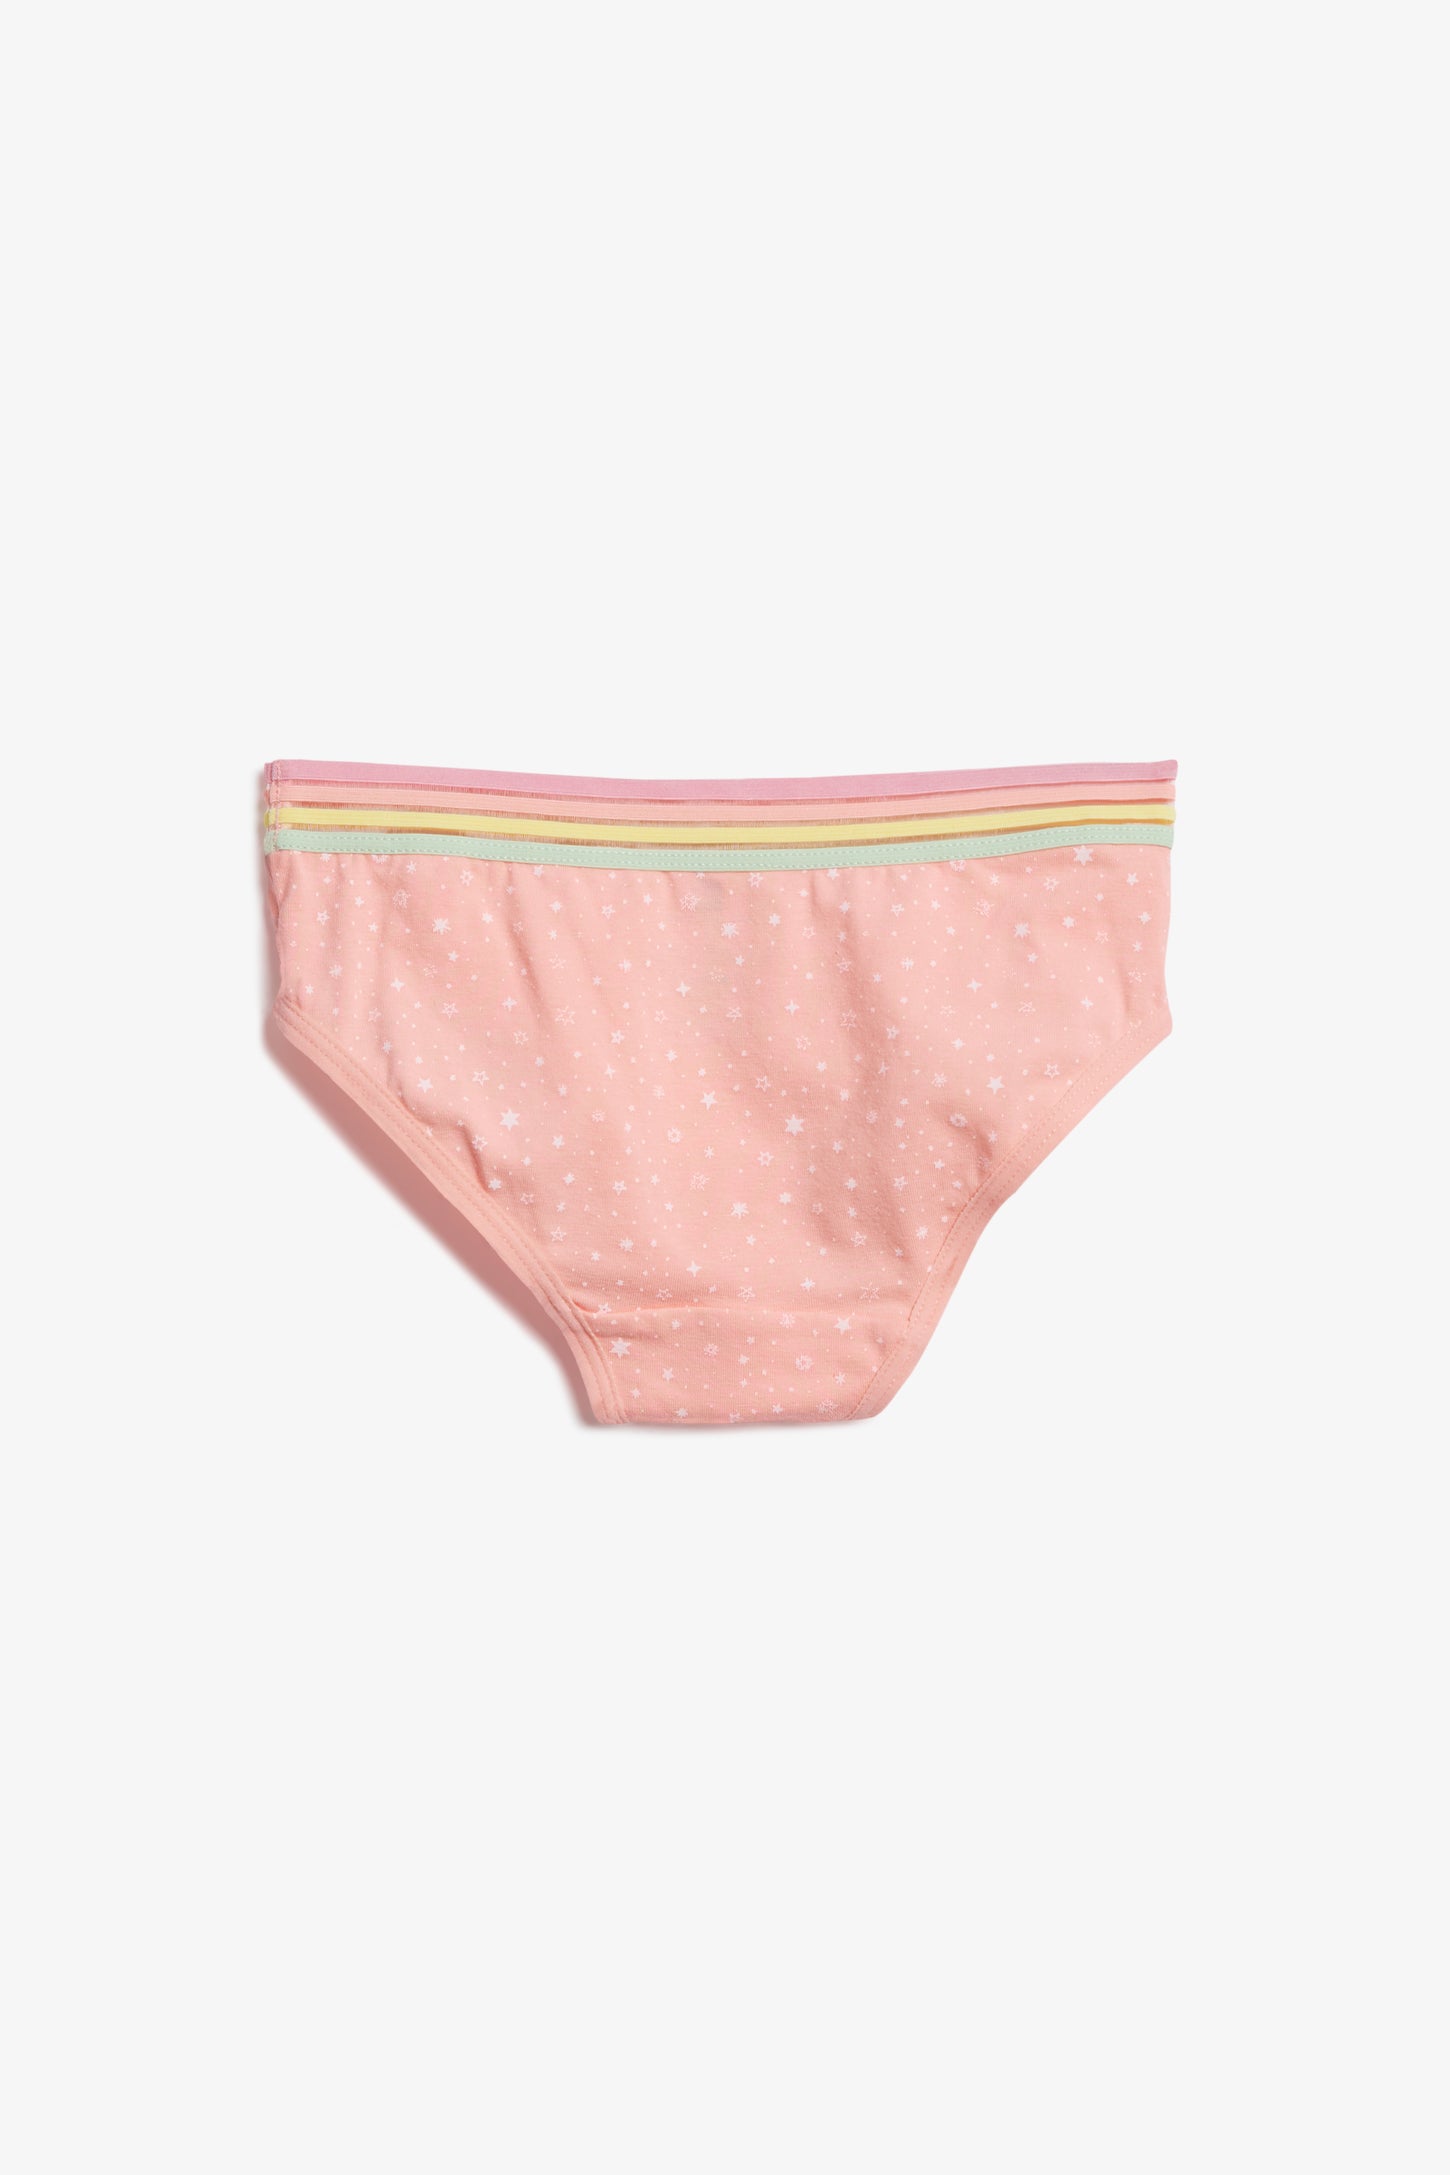 Culotte bikini arc-en-ciel, 4/20$ - Enfant fille && PECHE